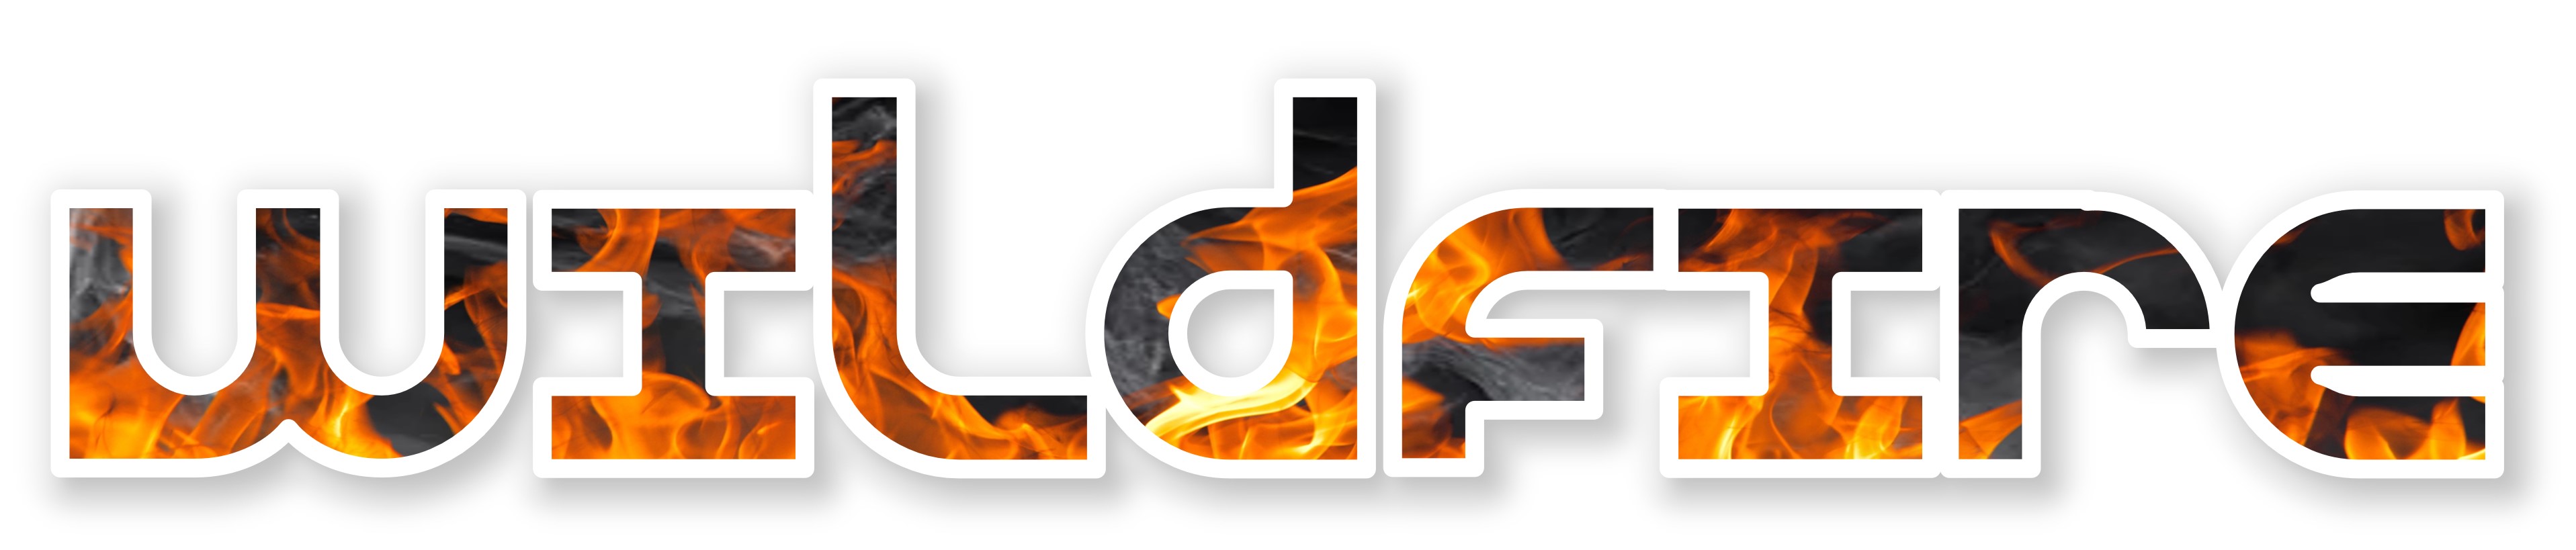 Wildfire logo light